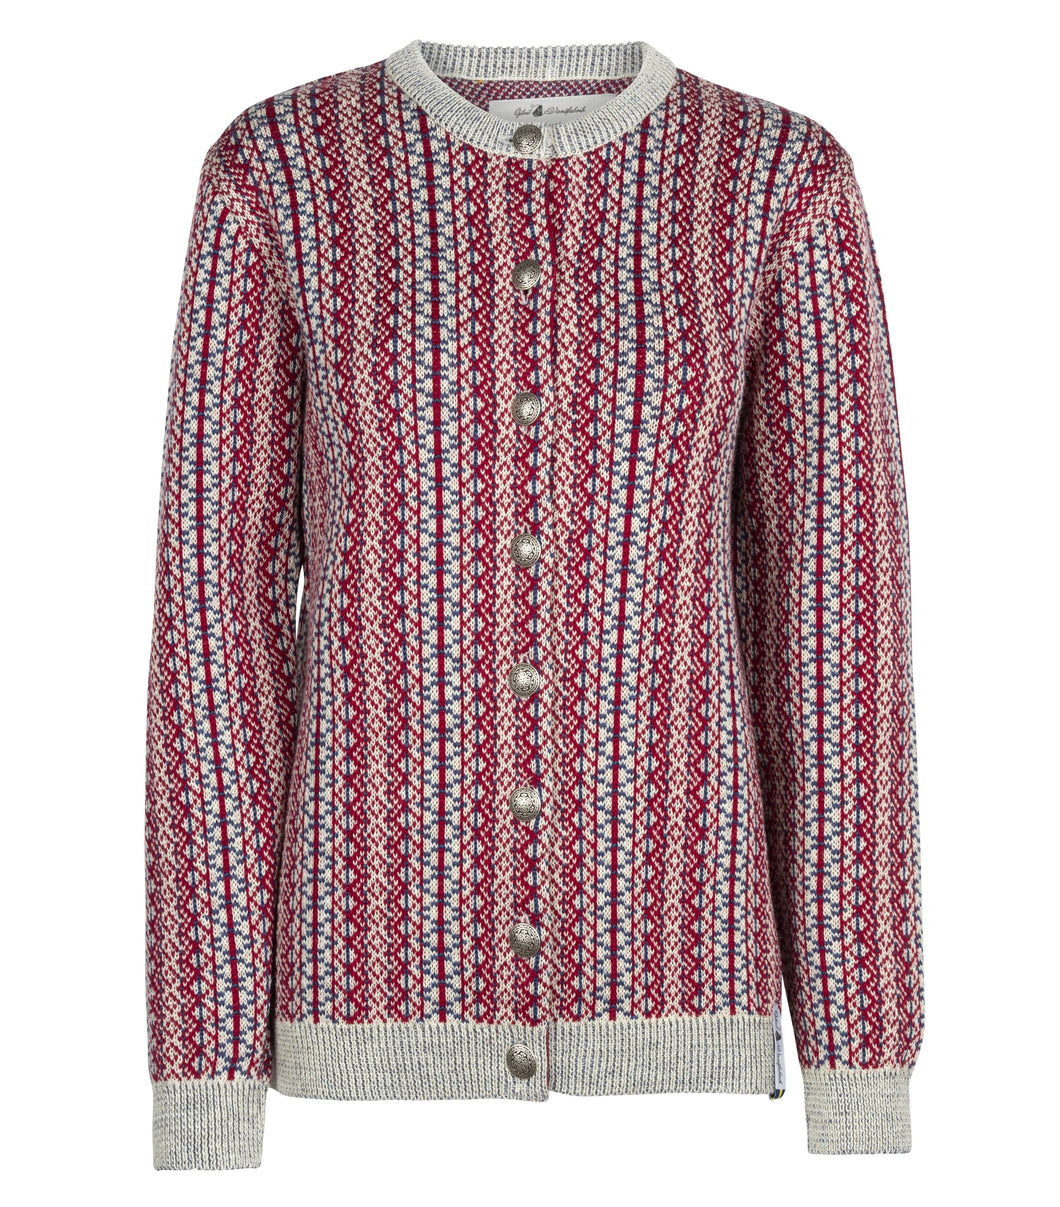 Lycksele Pattern Merino Wool Cardigan Sweater